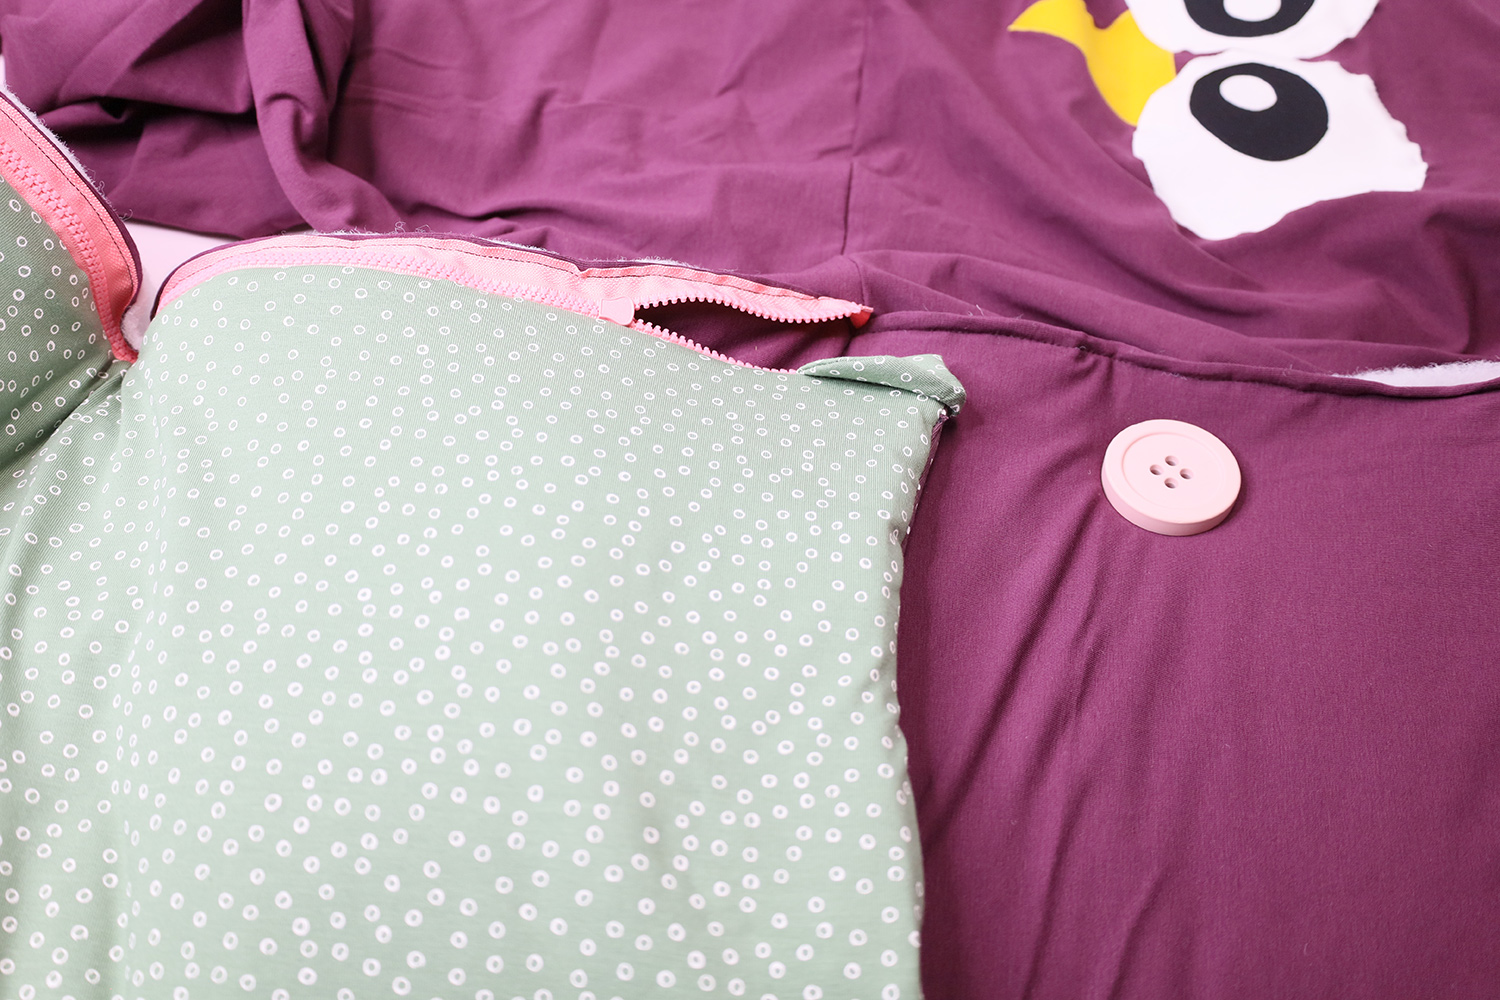 Kinderschlafsack nähen – Schnittmuster kostenlos